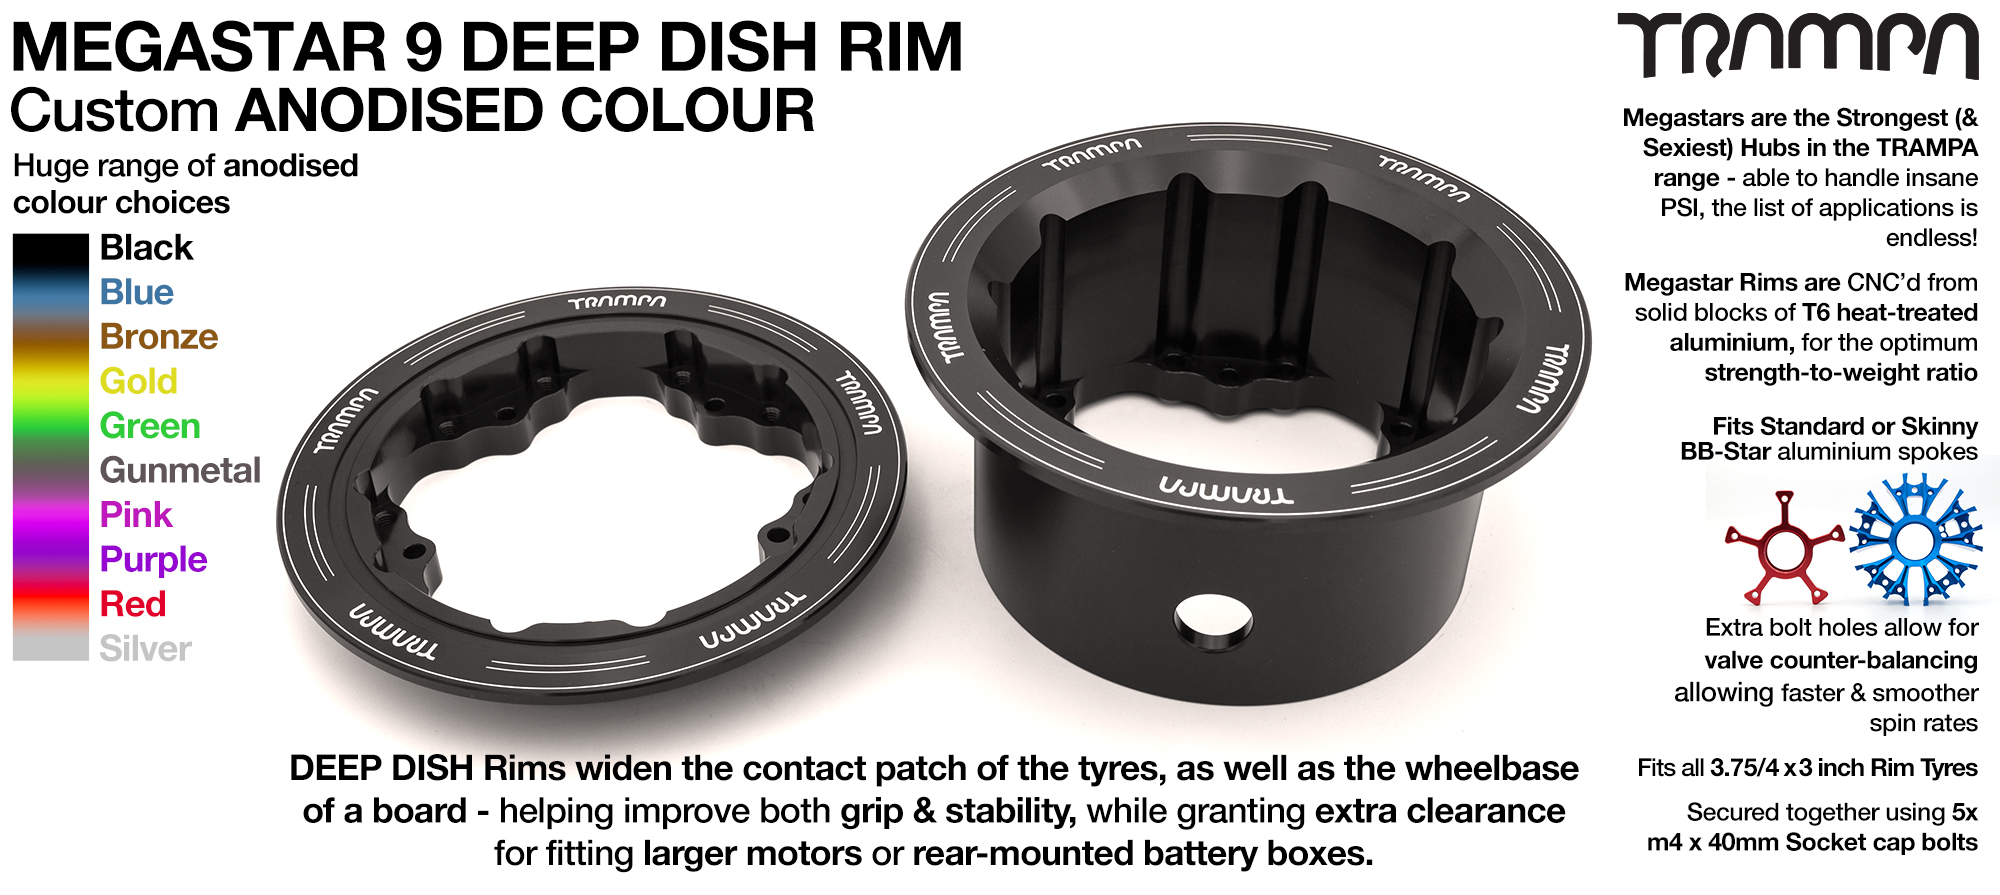 4x MEGASTAR 9 DEEP-DISH Rims Measure 3.75/4x 3 Inch & accept 4 Inch Rim Tyres to make 9 or 10 inch Wheels